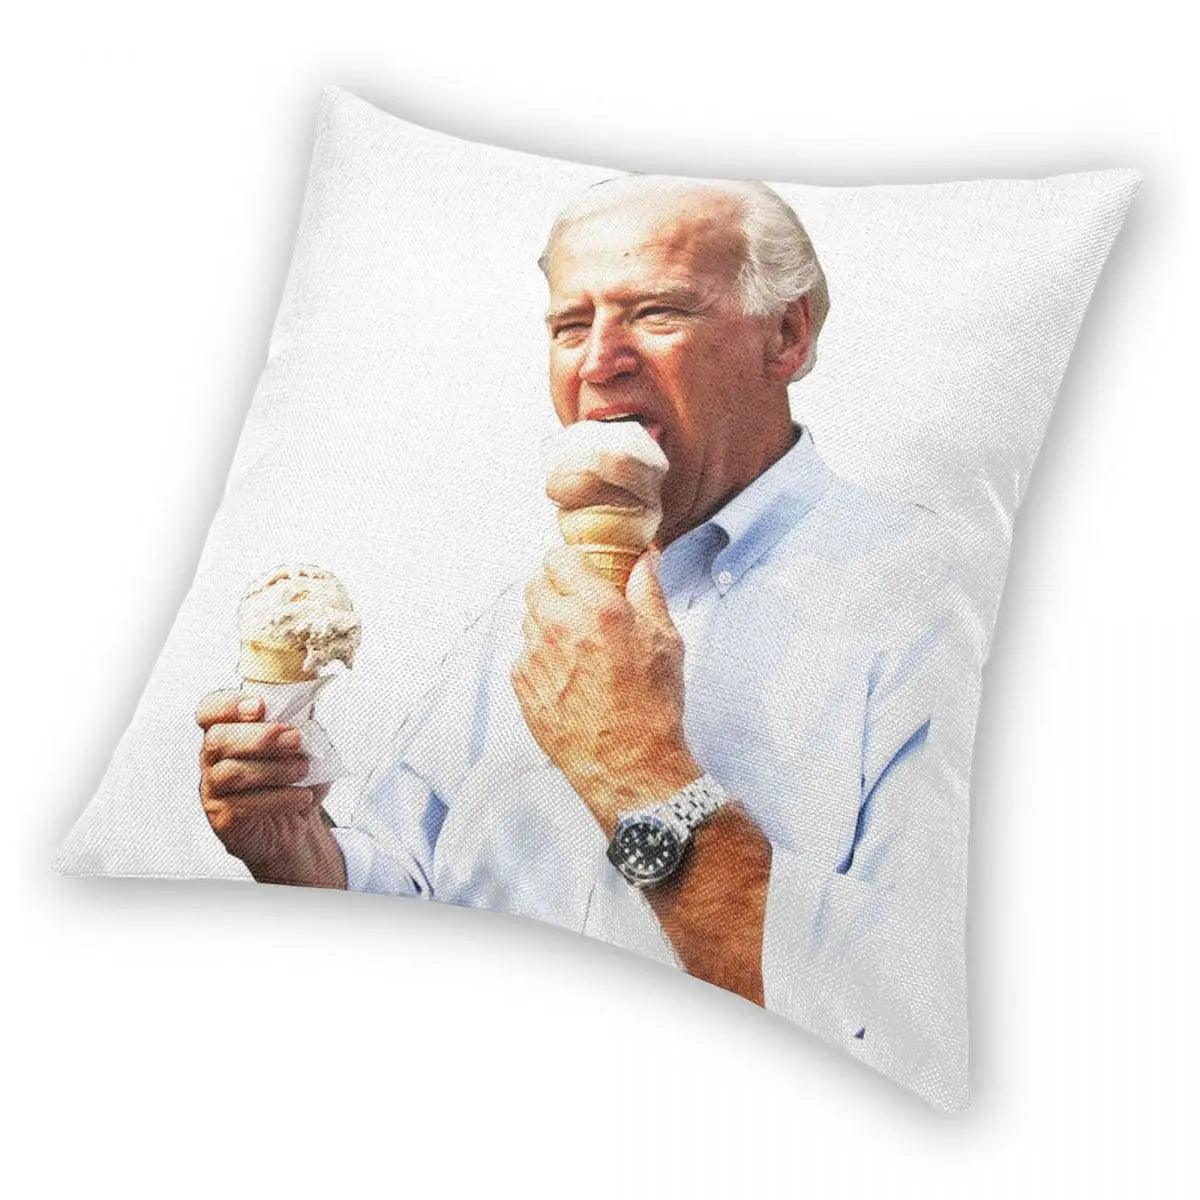 Pro-Trump - Pillowcase Cover - Joe Biden Eating Ice Cream Square Pillowcase